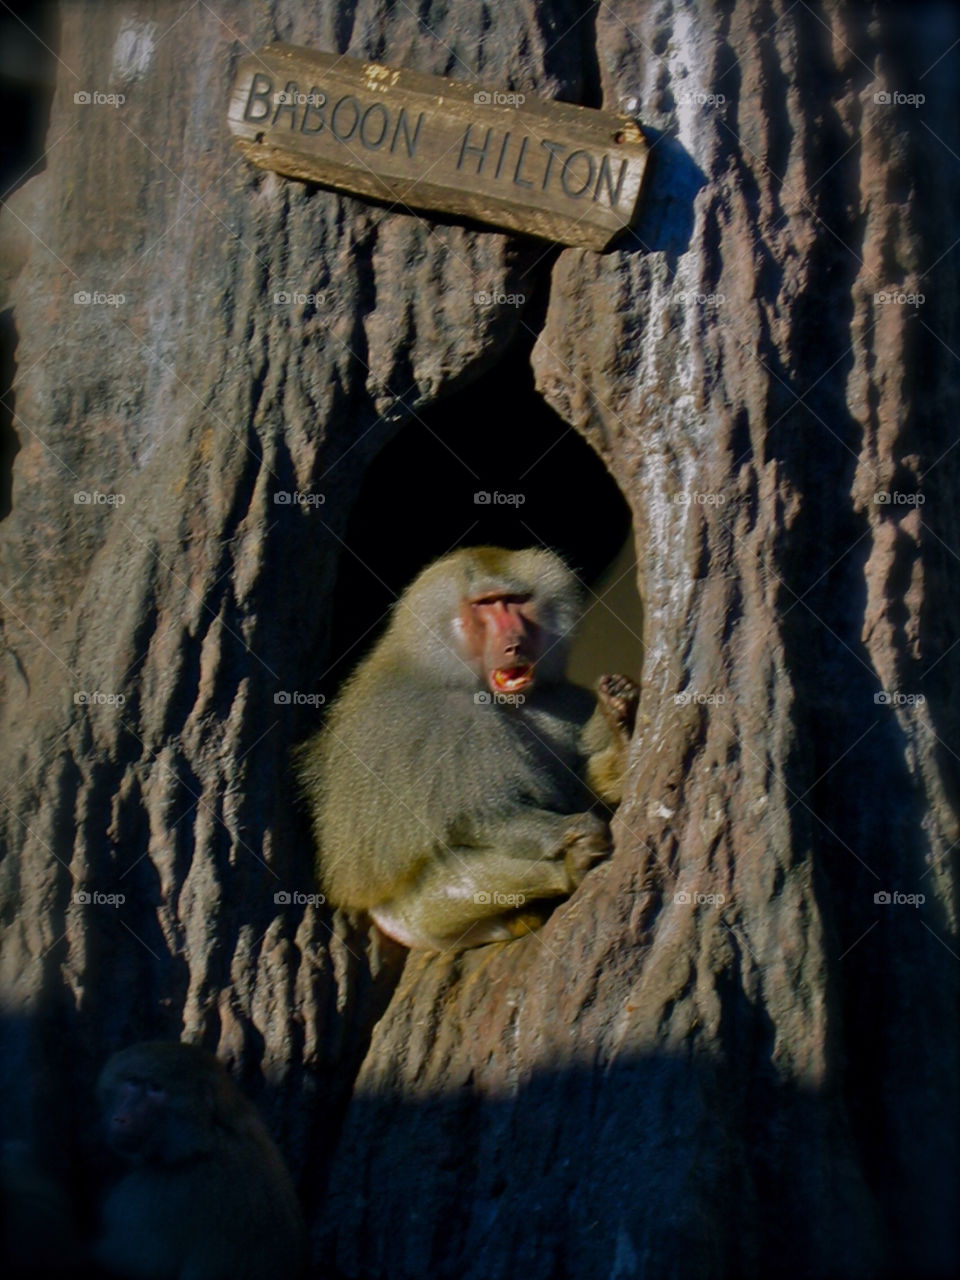 wood monkey by lennart1968